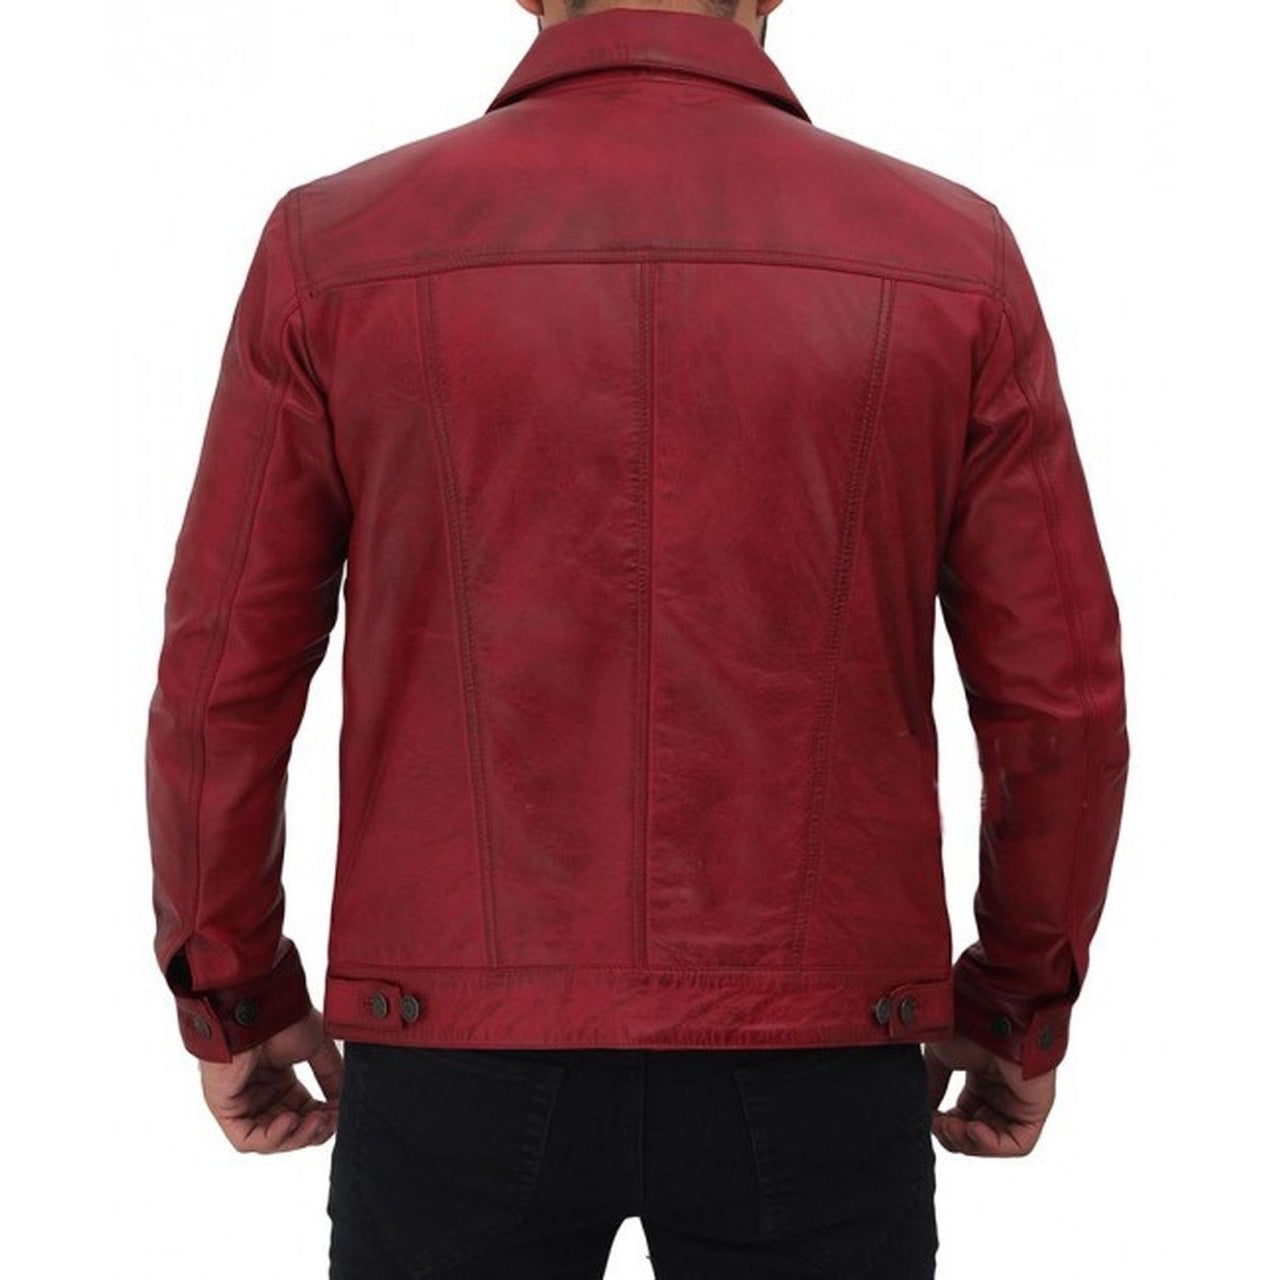 Maroon Trucker Leather Jacket Mens - Leather Jacket